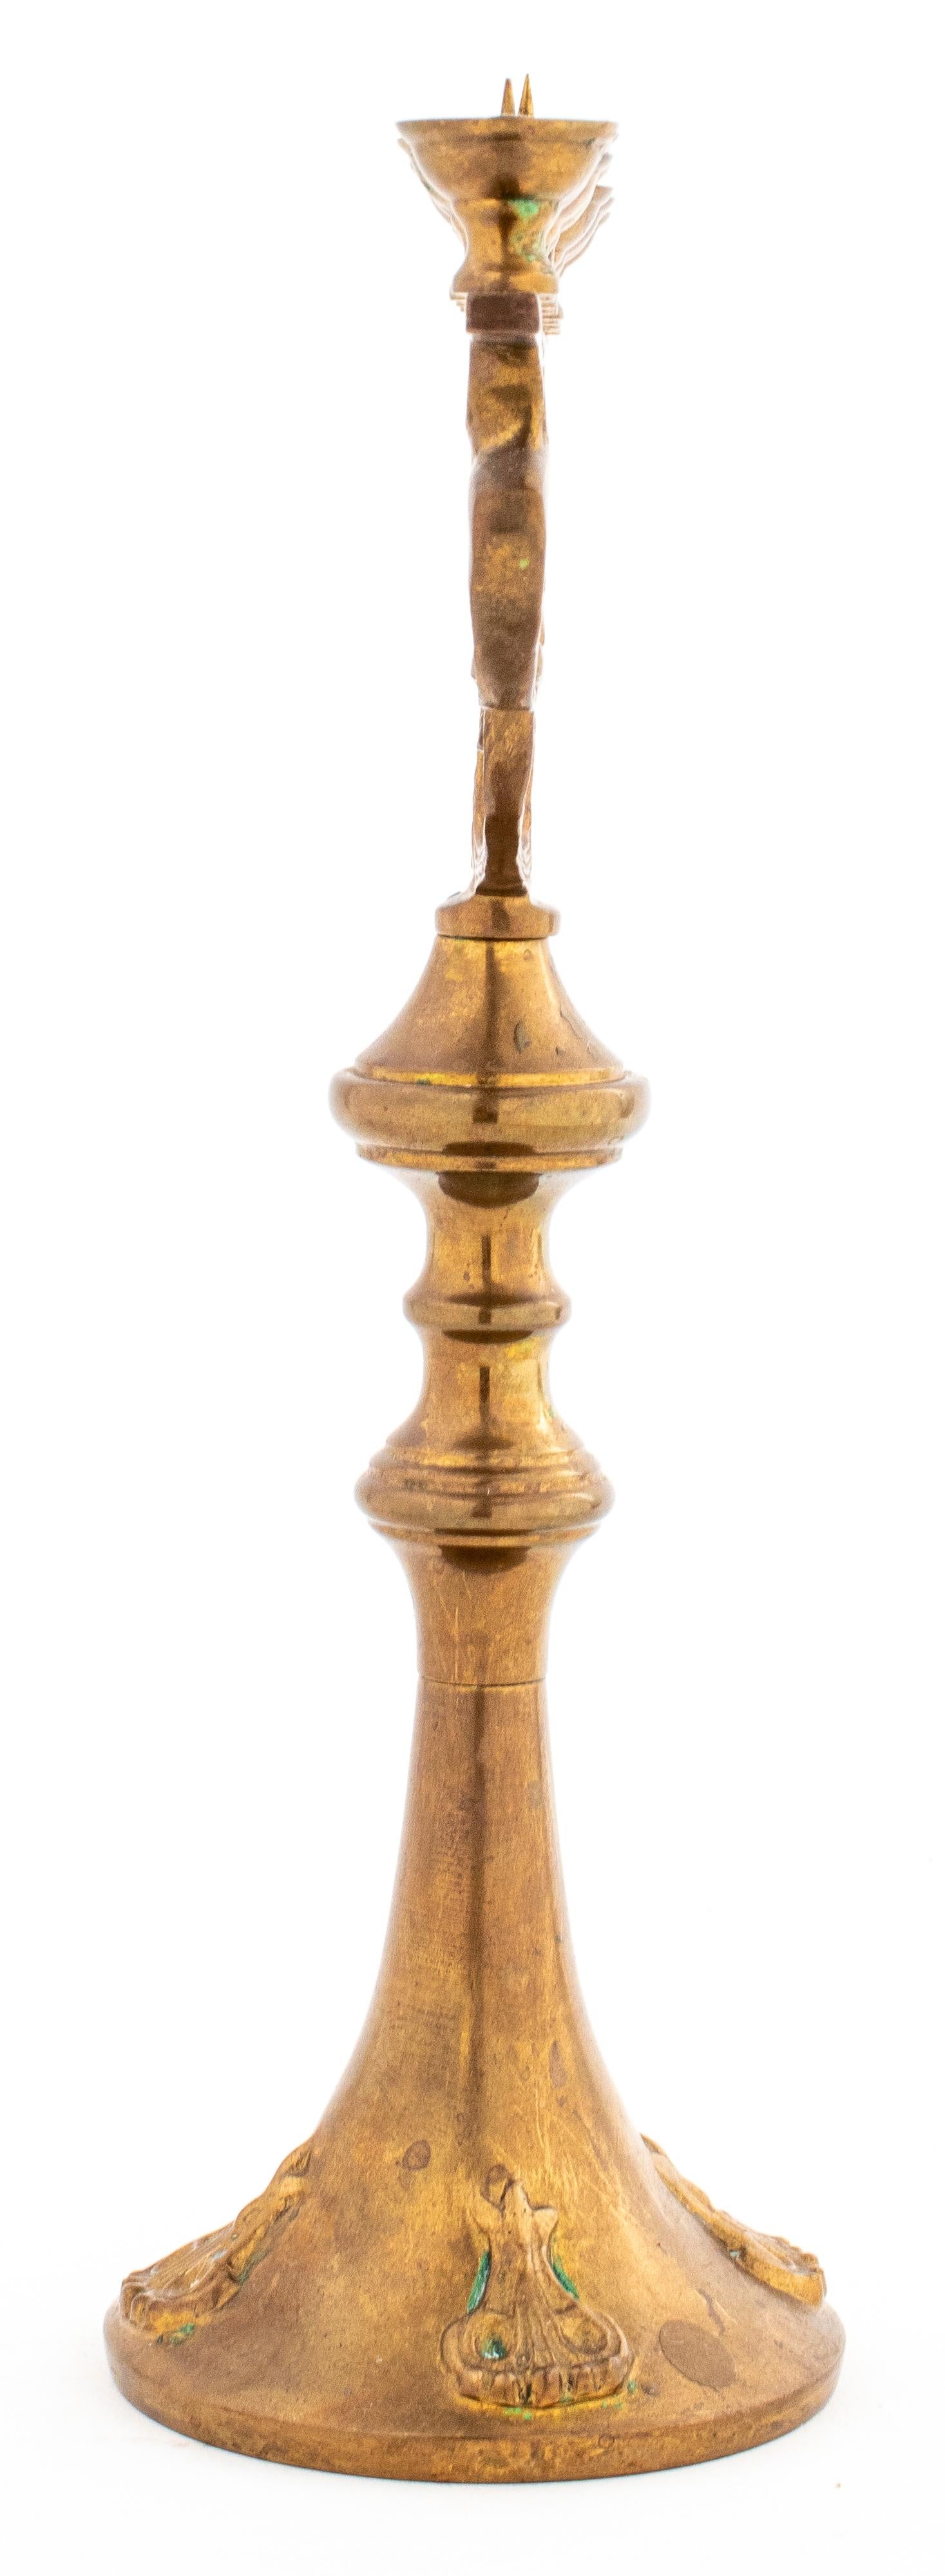 Brass Judaica / Hanukkah menorah with decorative Art Nouveau style details, marked to underside: 